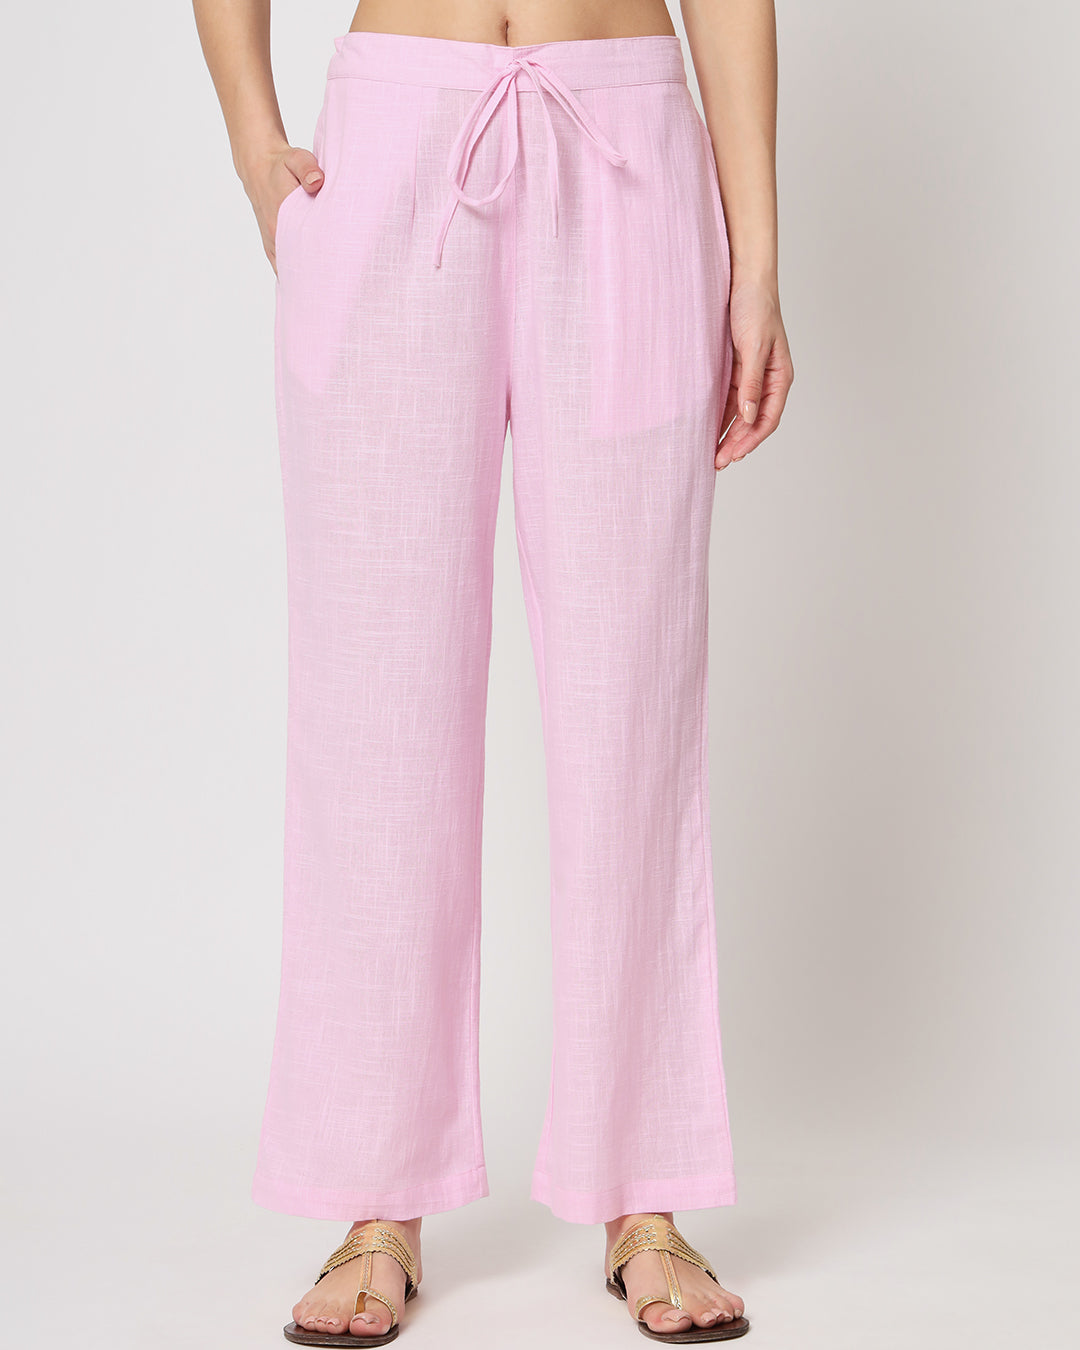 Combo: Blue Breeze & Pink Mist Straight Pants- Set of 2